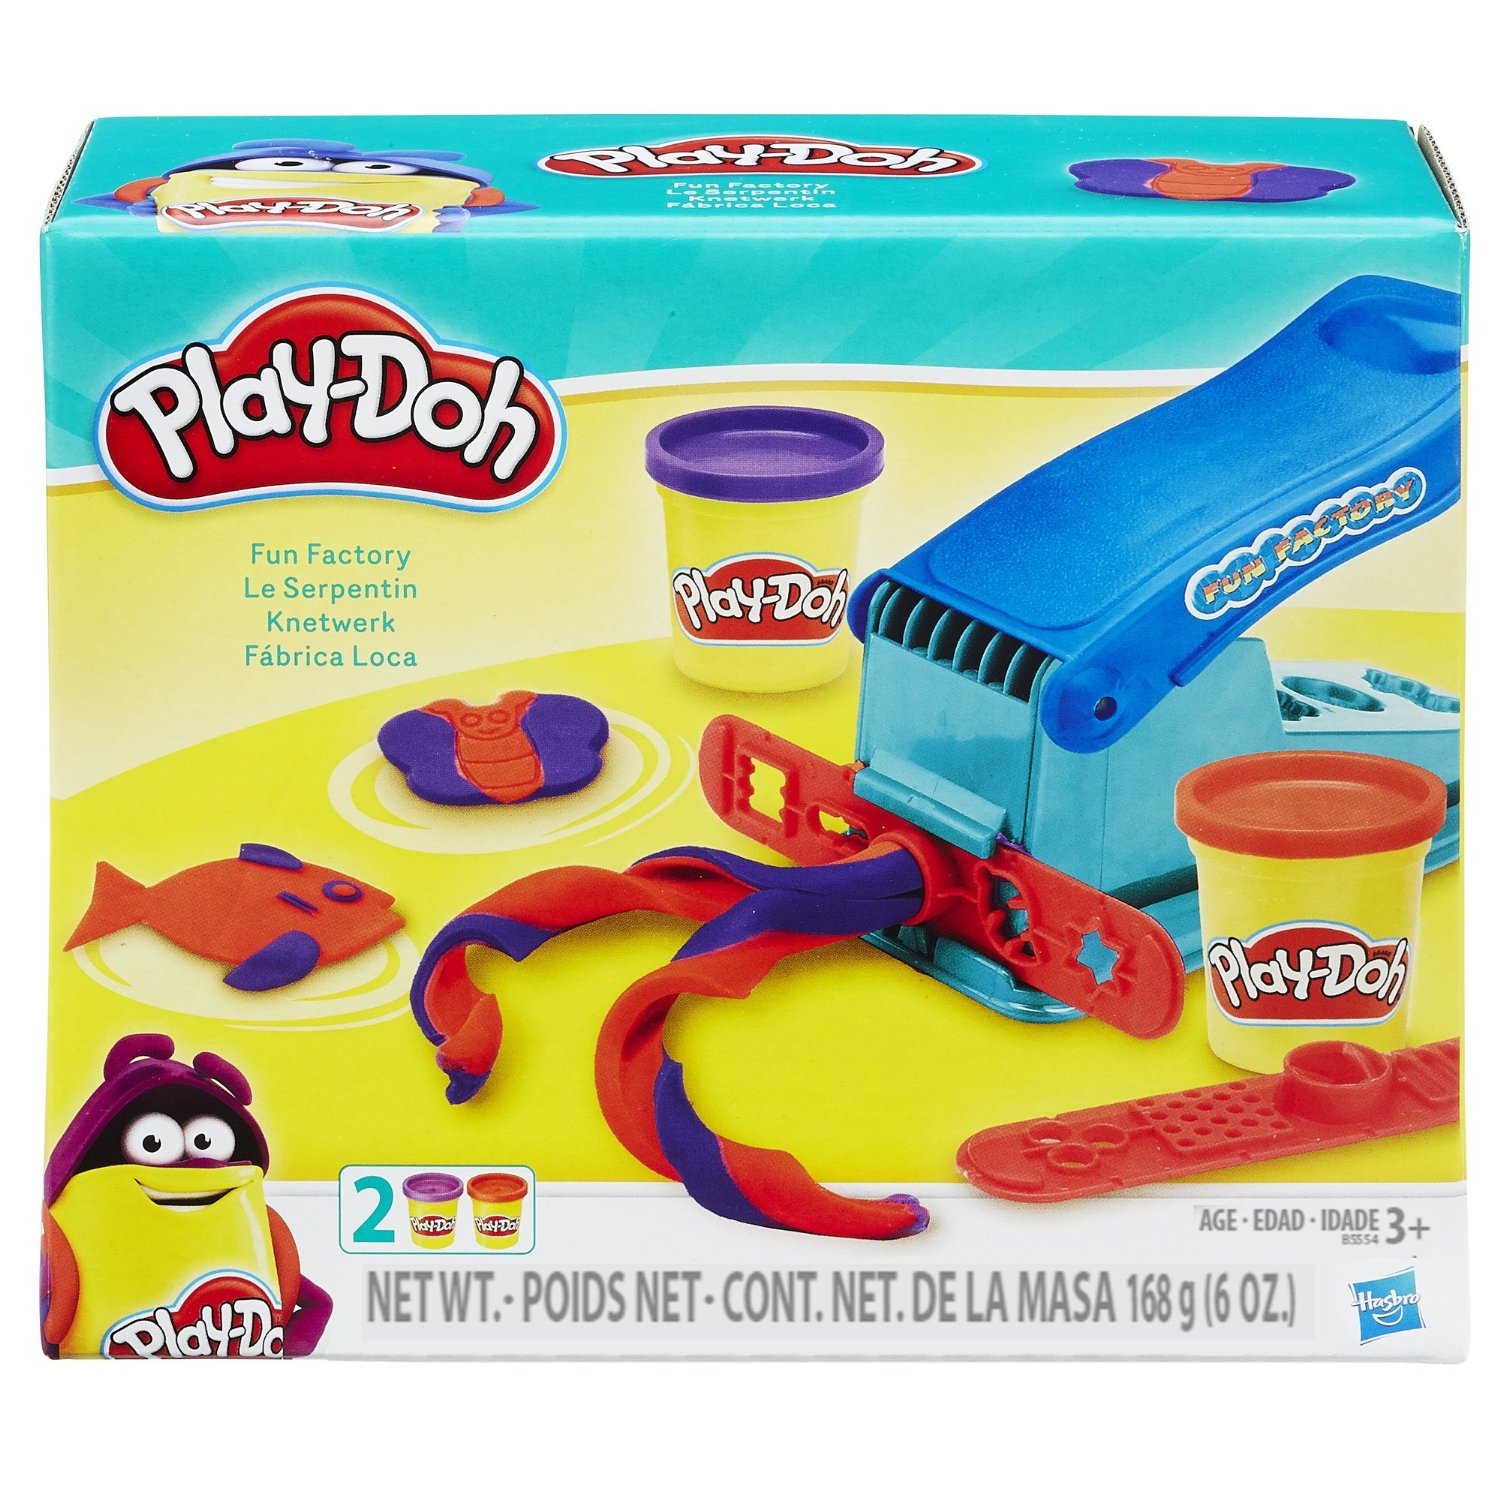 Play-Doh Fun Factory Set – Just $5.99